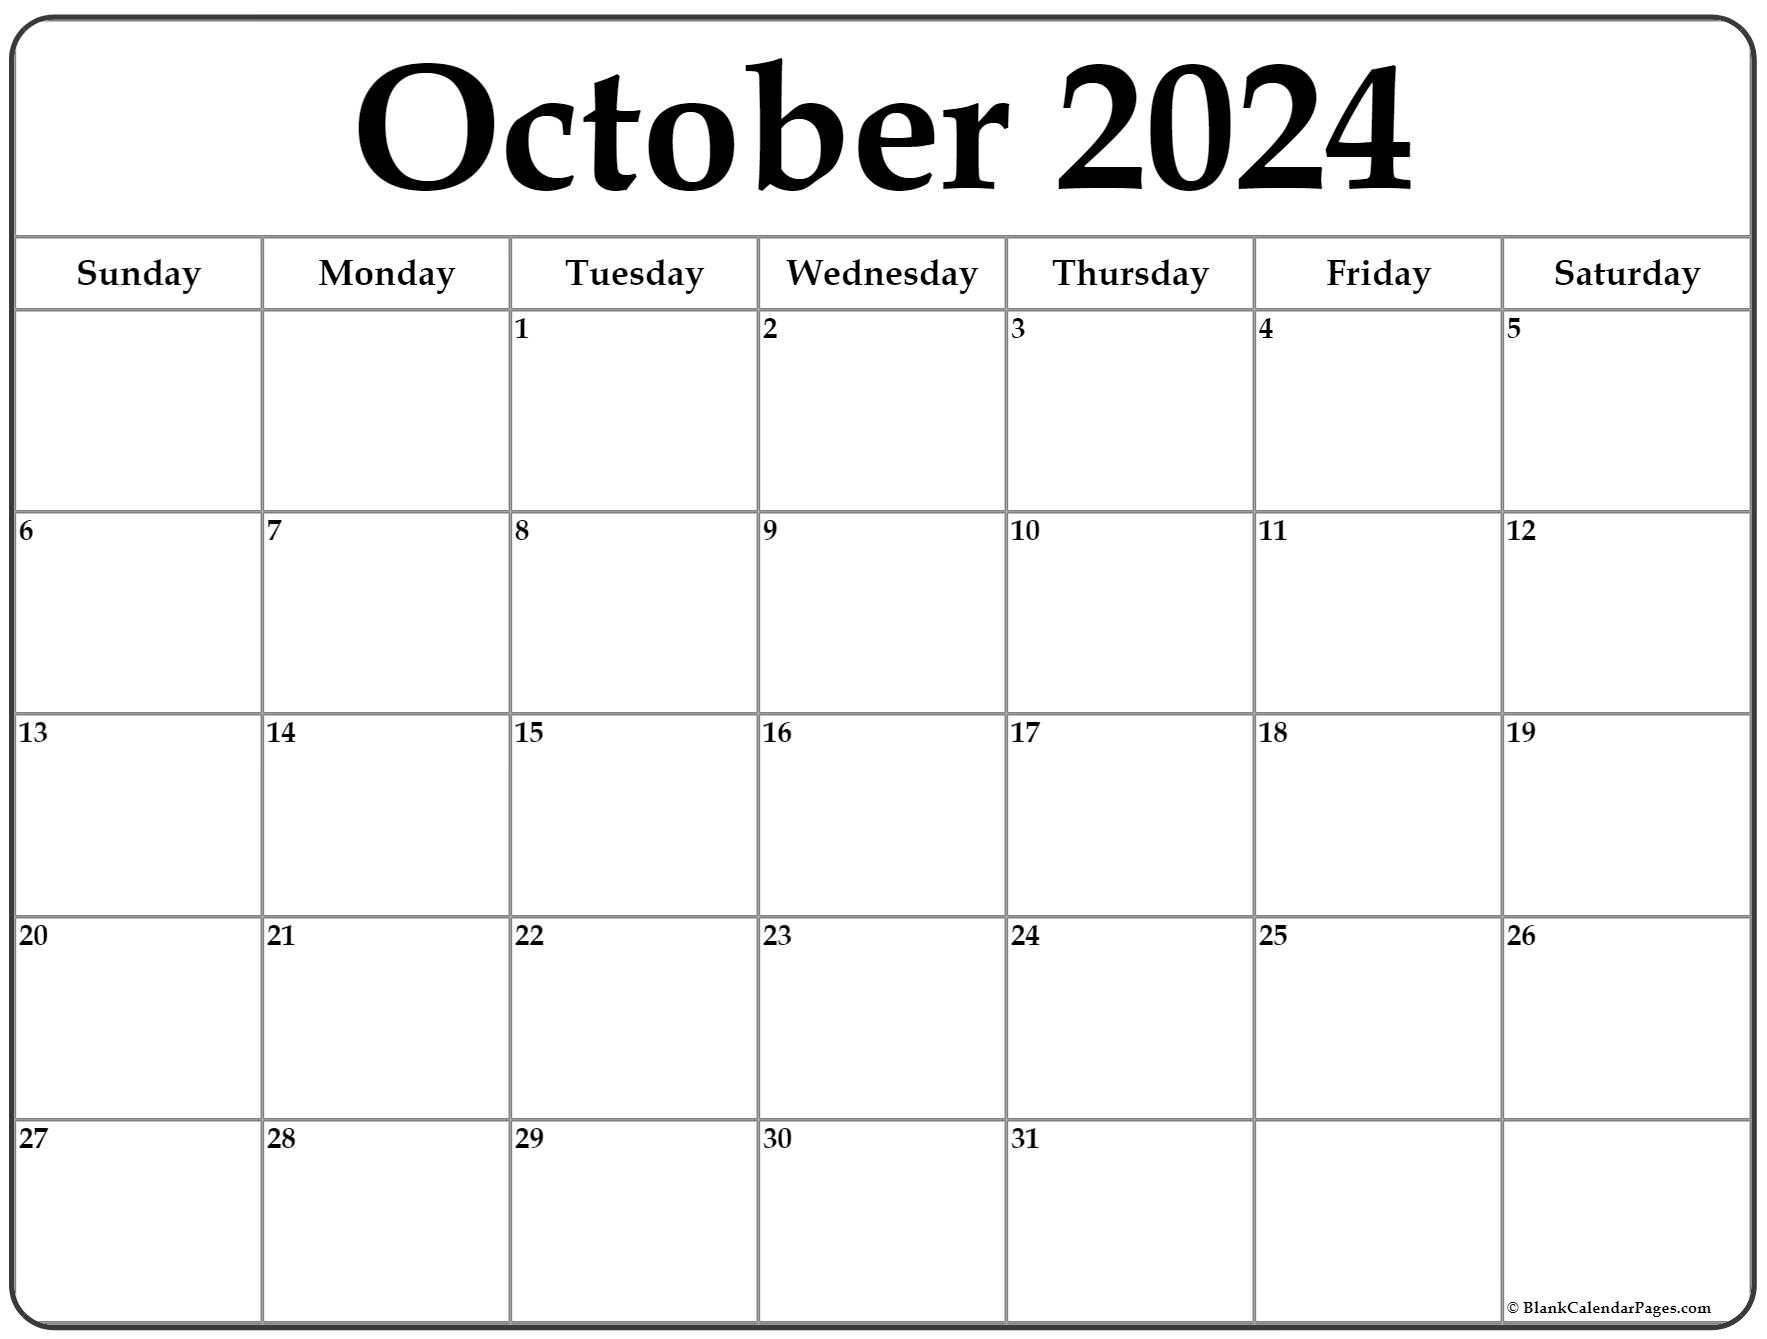 October 2024 Calendar Free Printable Calendar - Free Printable 2024 October Calendar